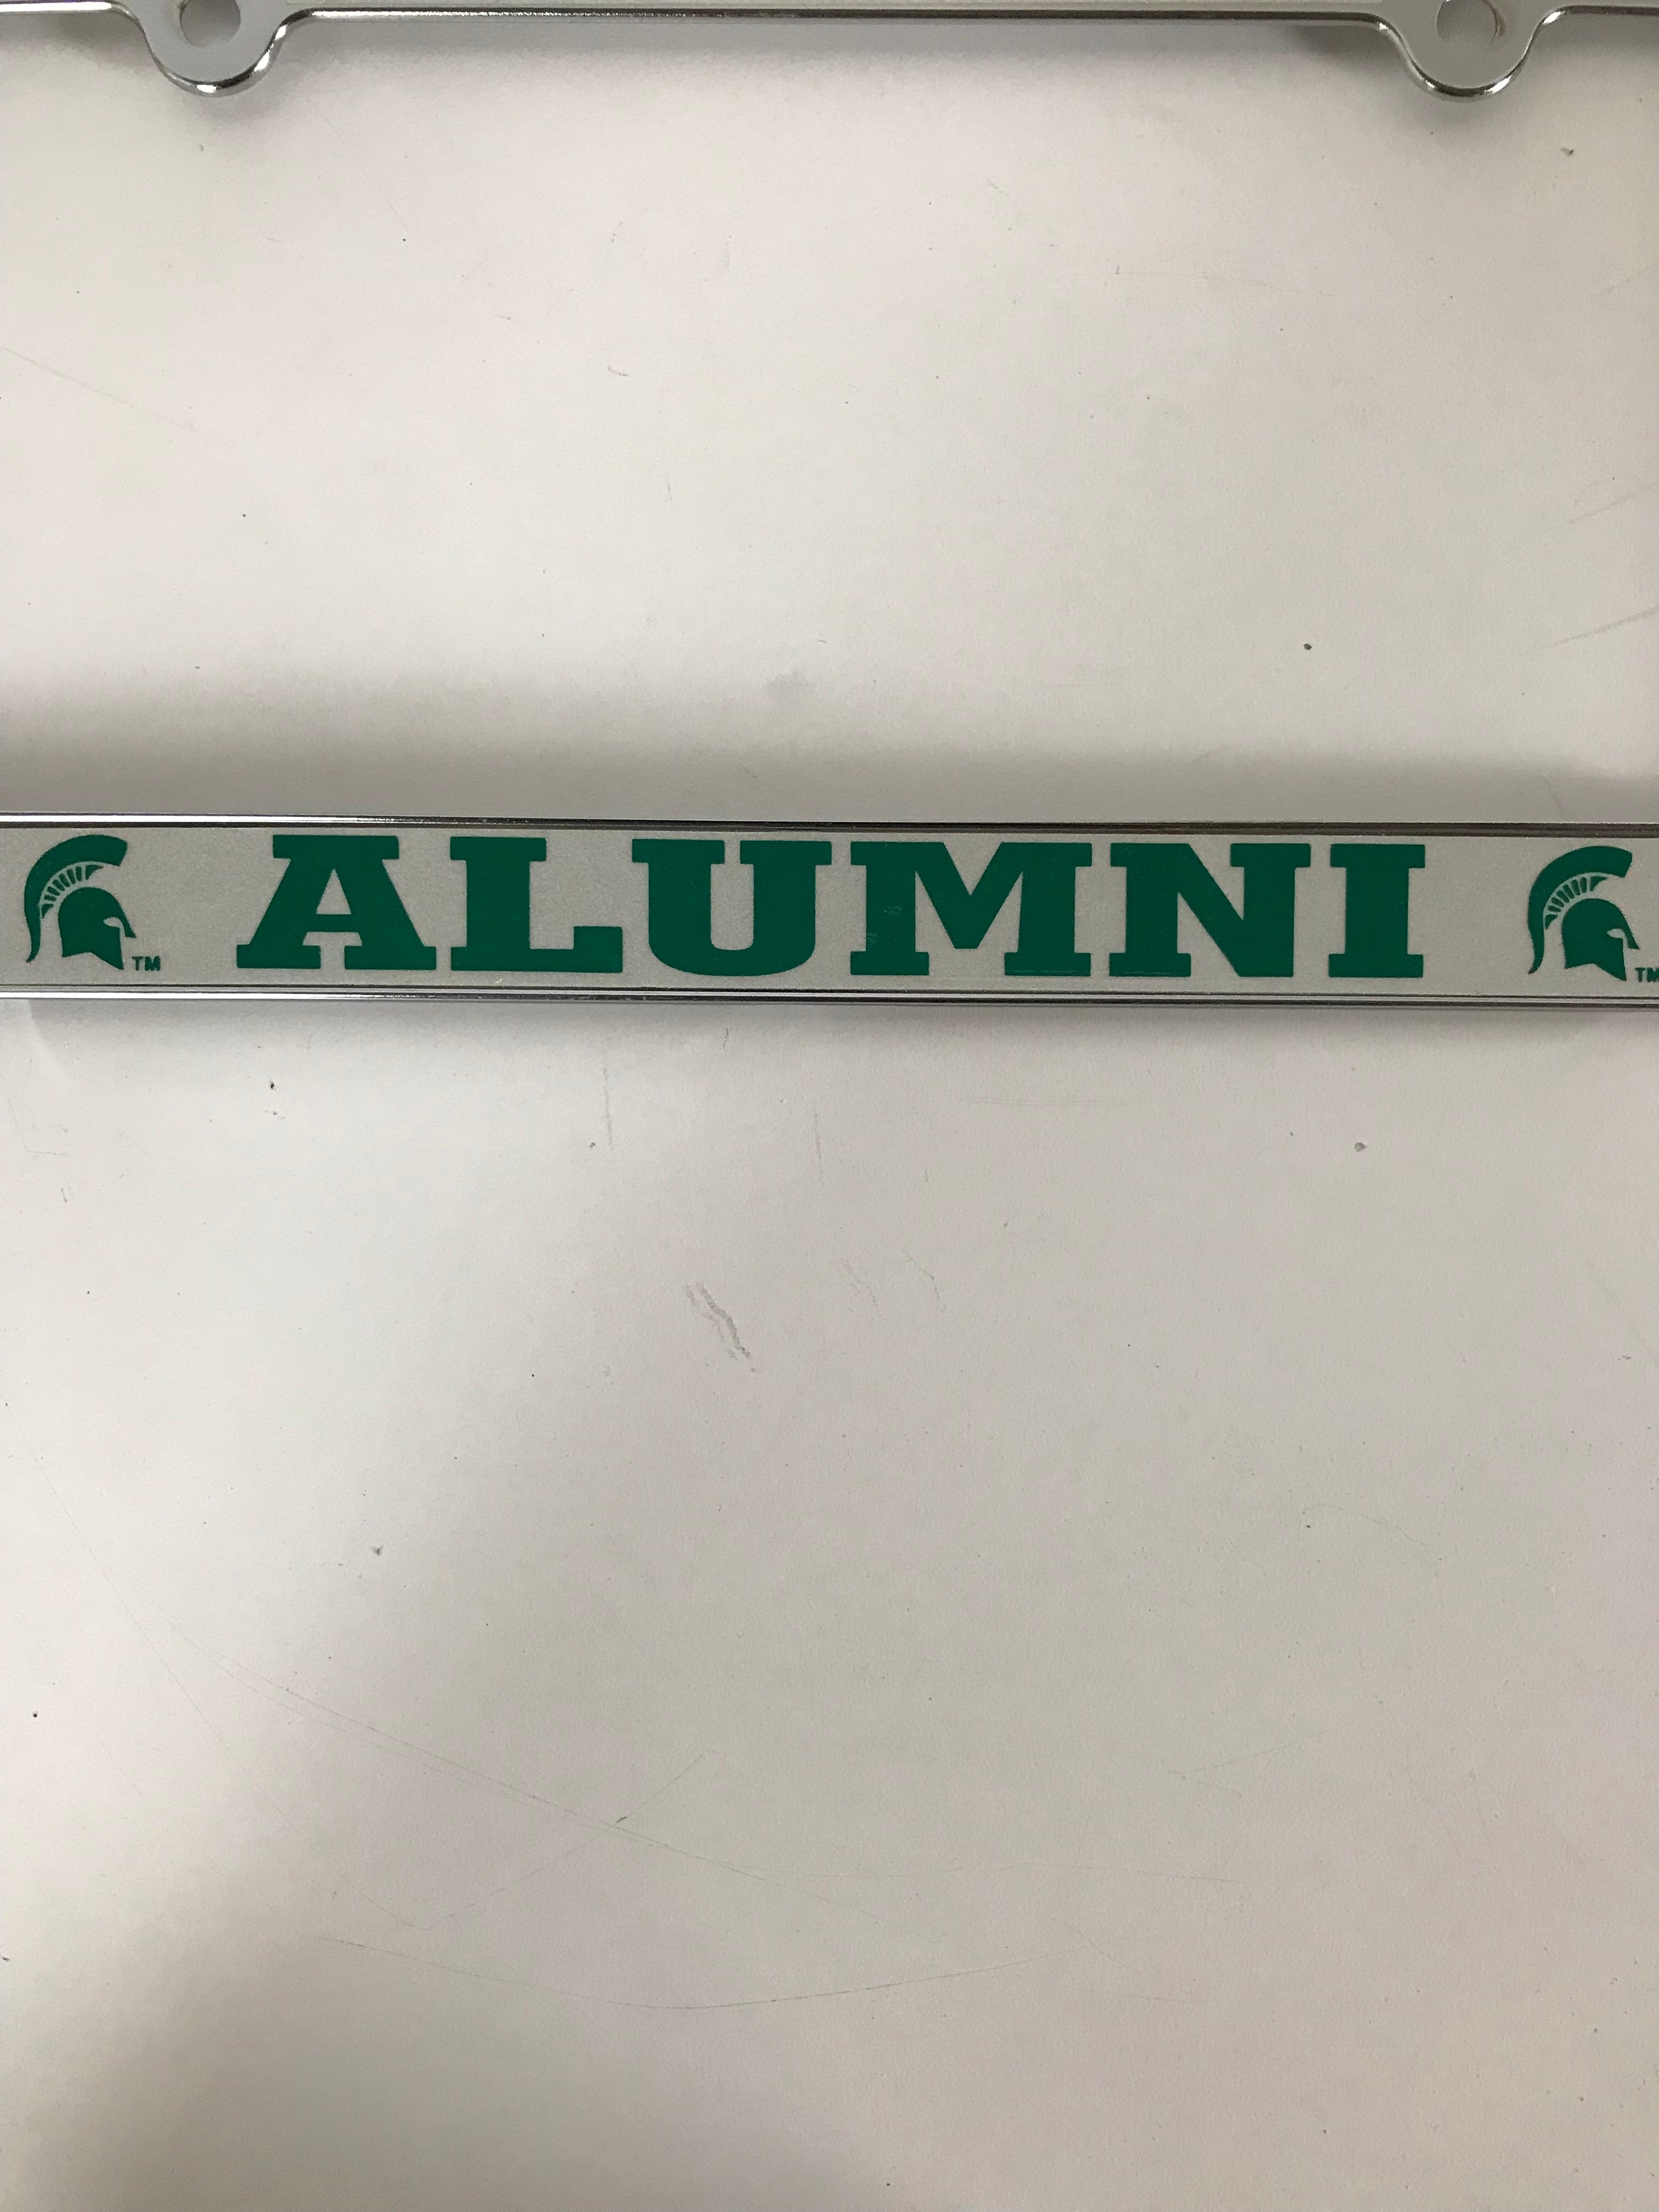 Michigan State Alumni Chrome License Plate Frame